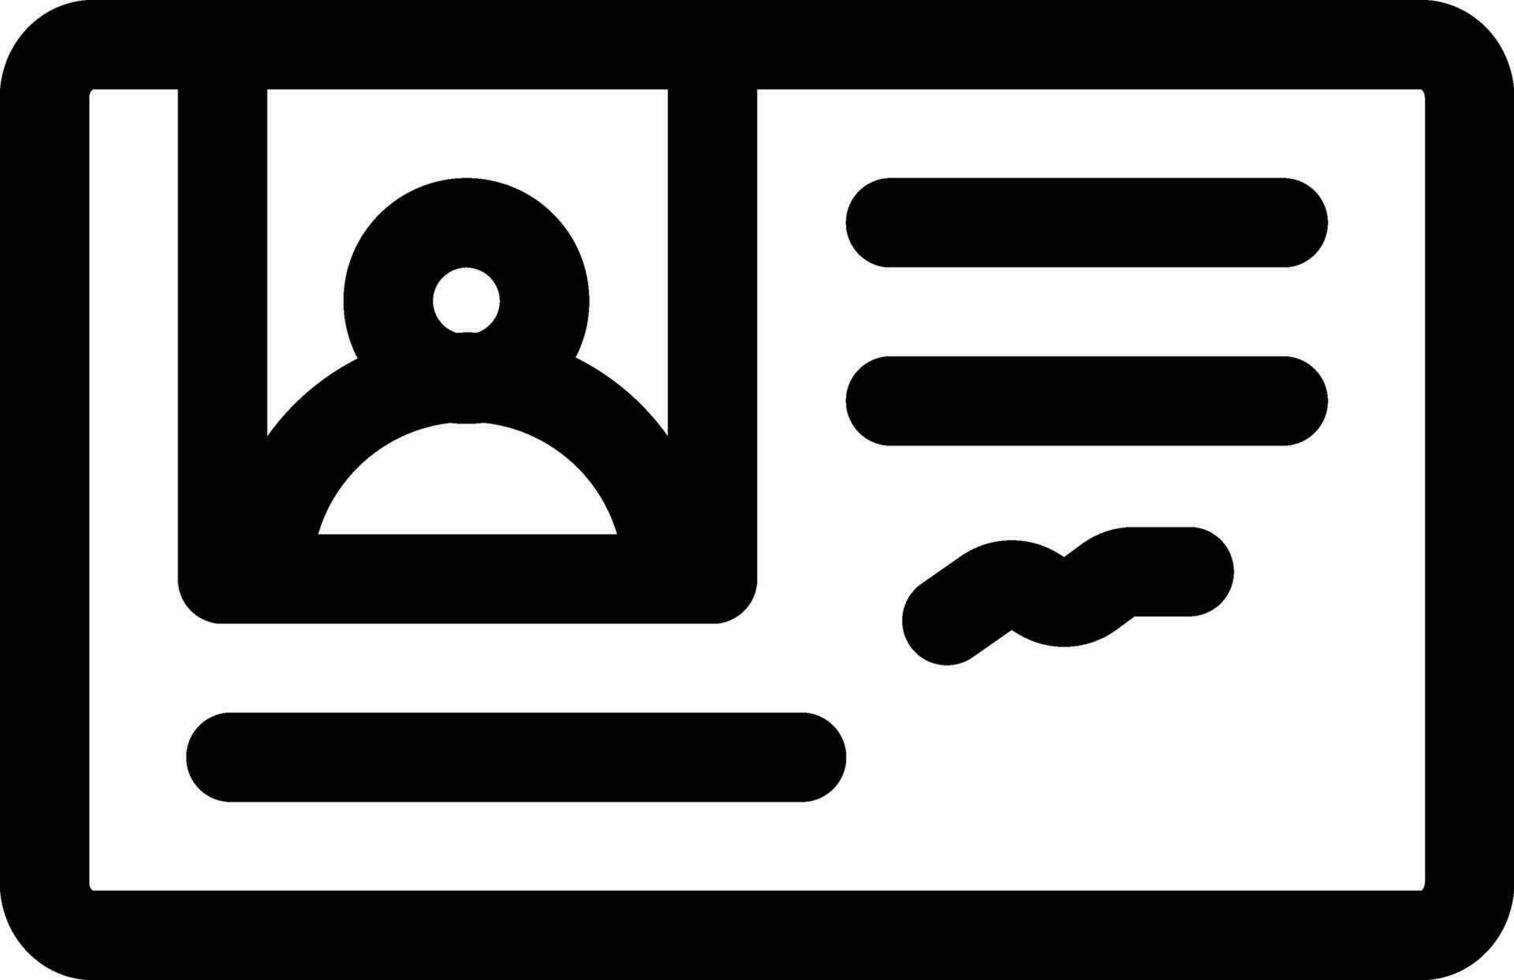 Identification Card Vector Icon